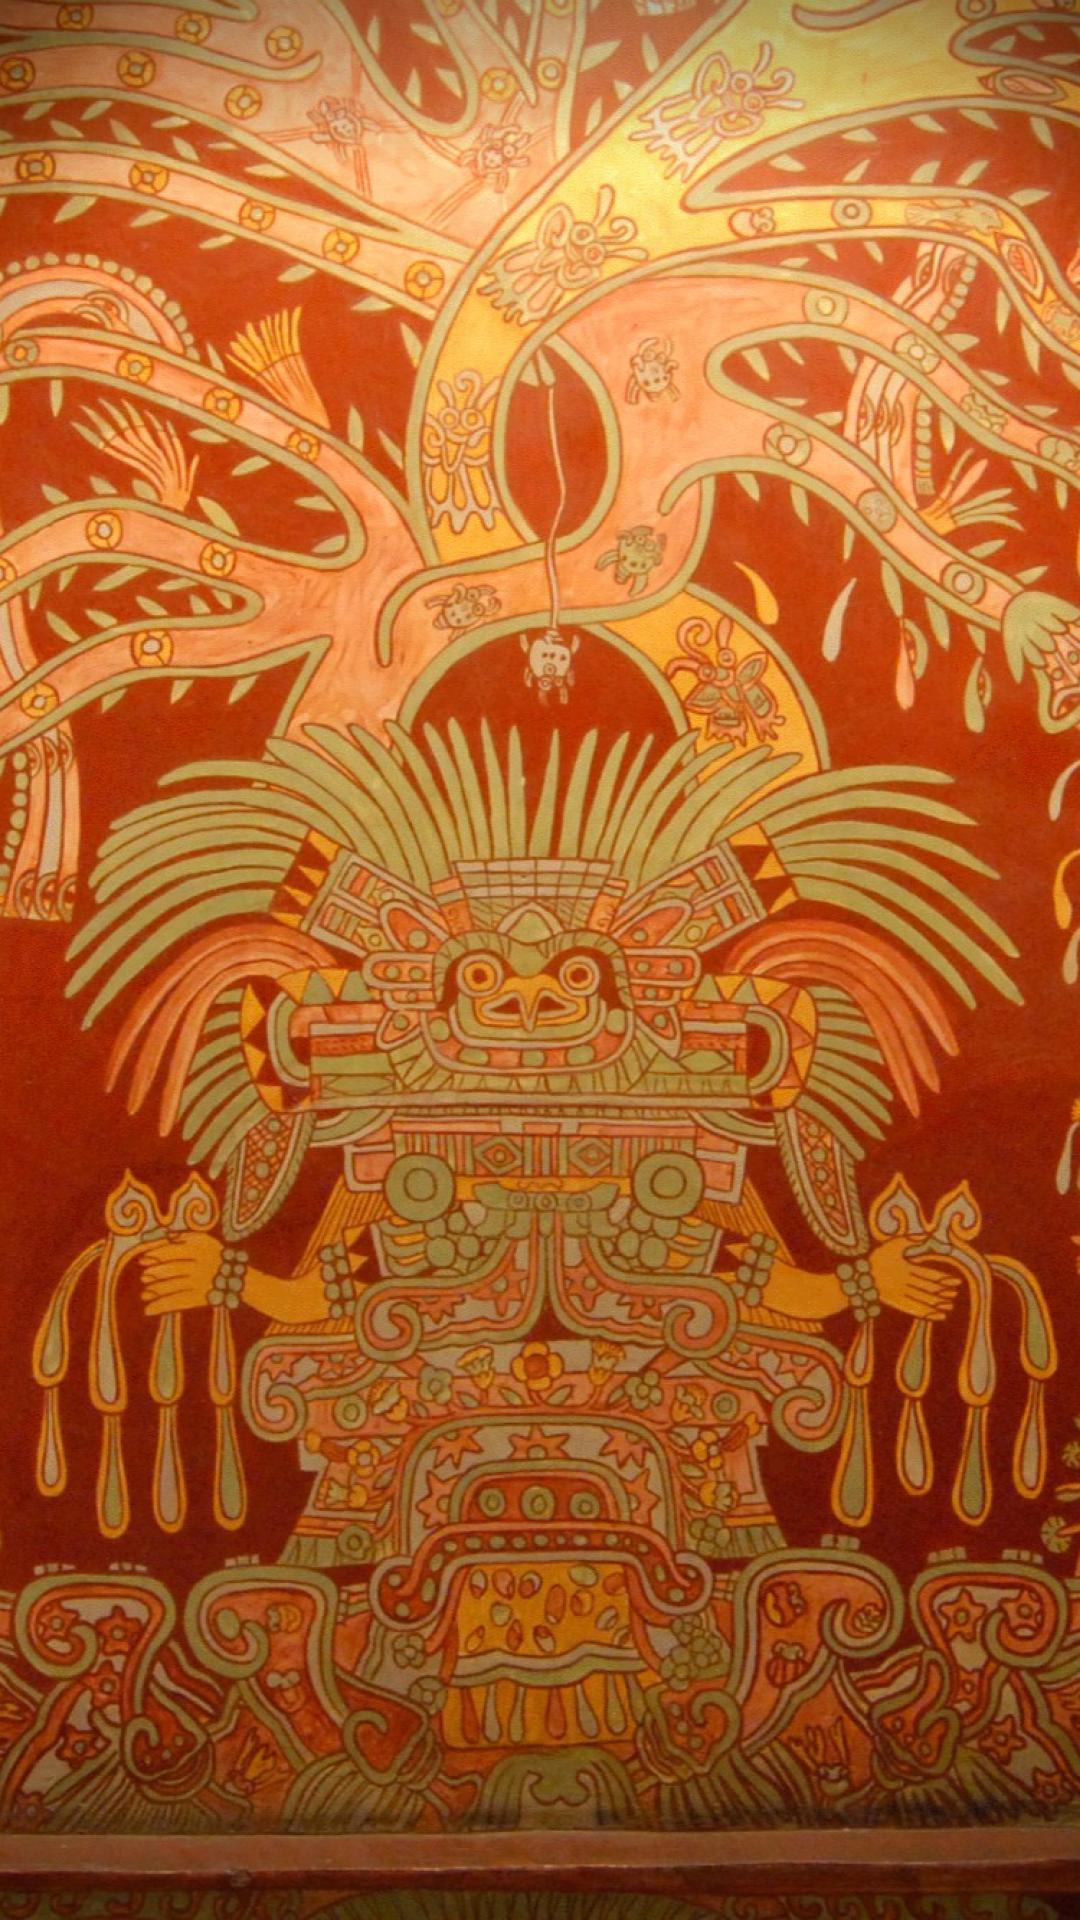 Aesthetic phone wallpaper tribal aztec  Free Photo  rawpixel